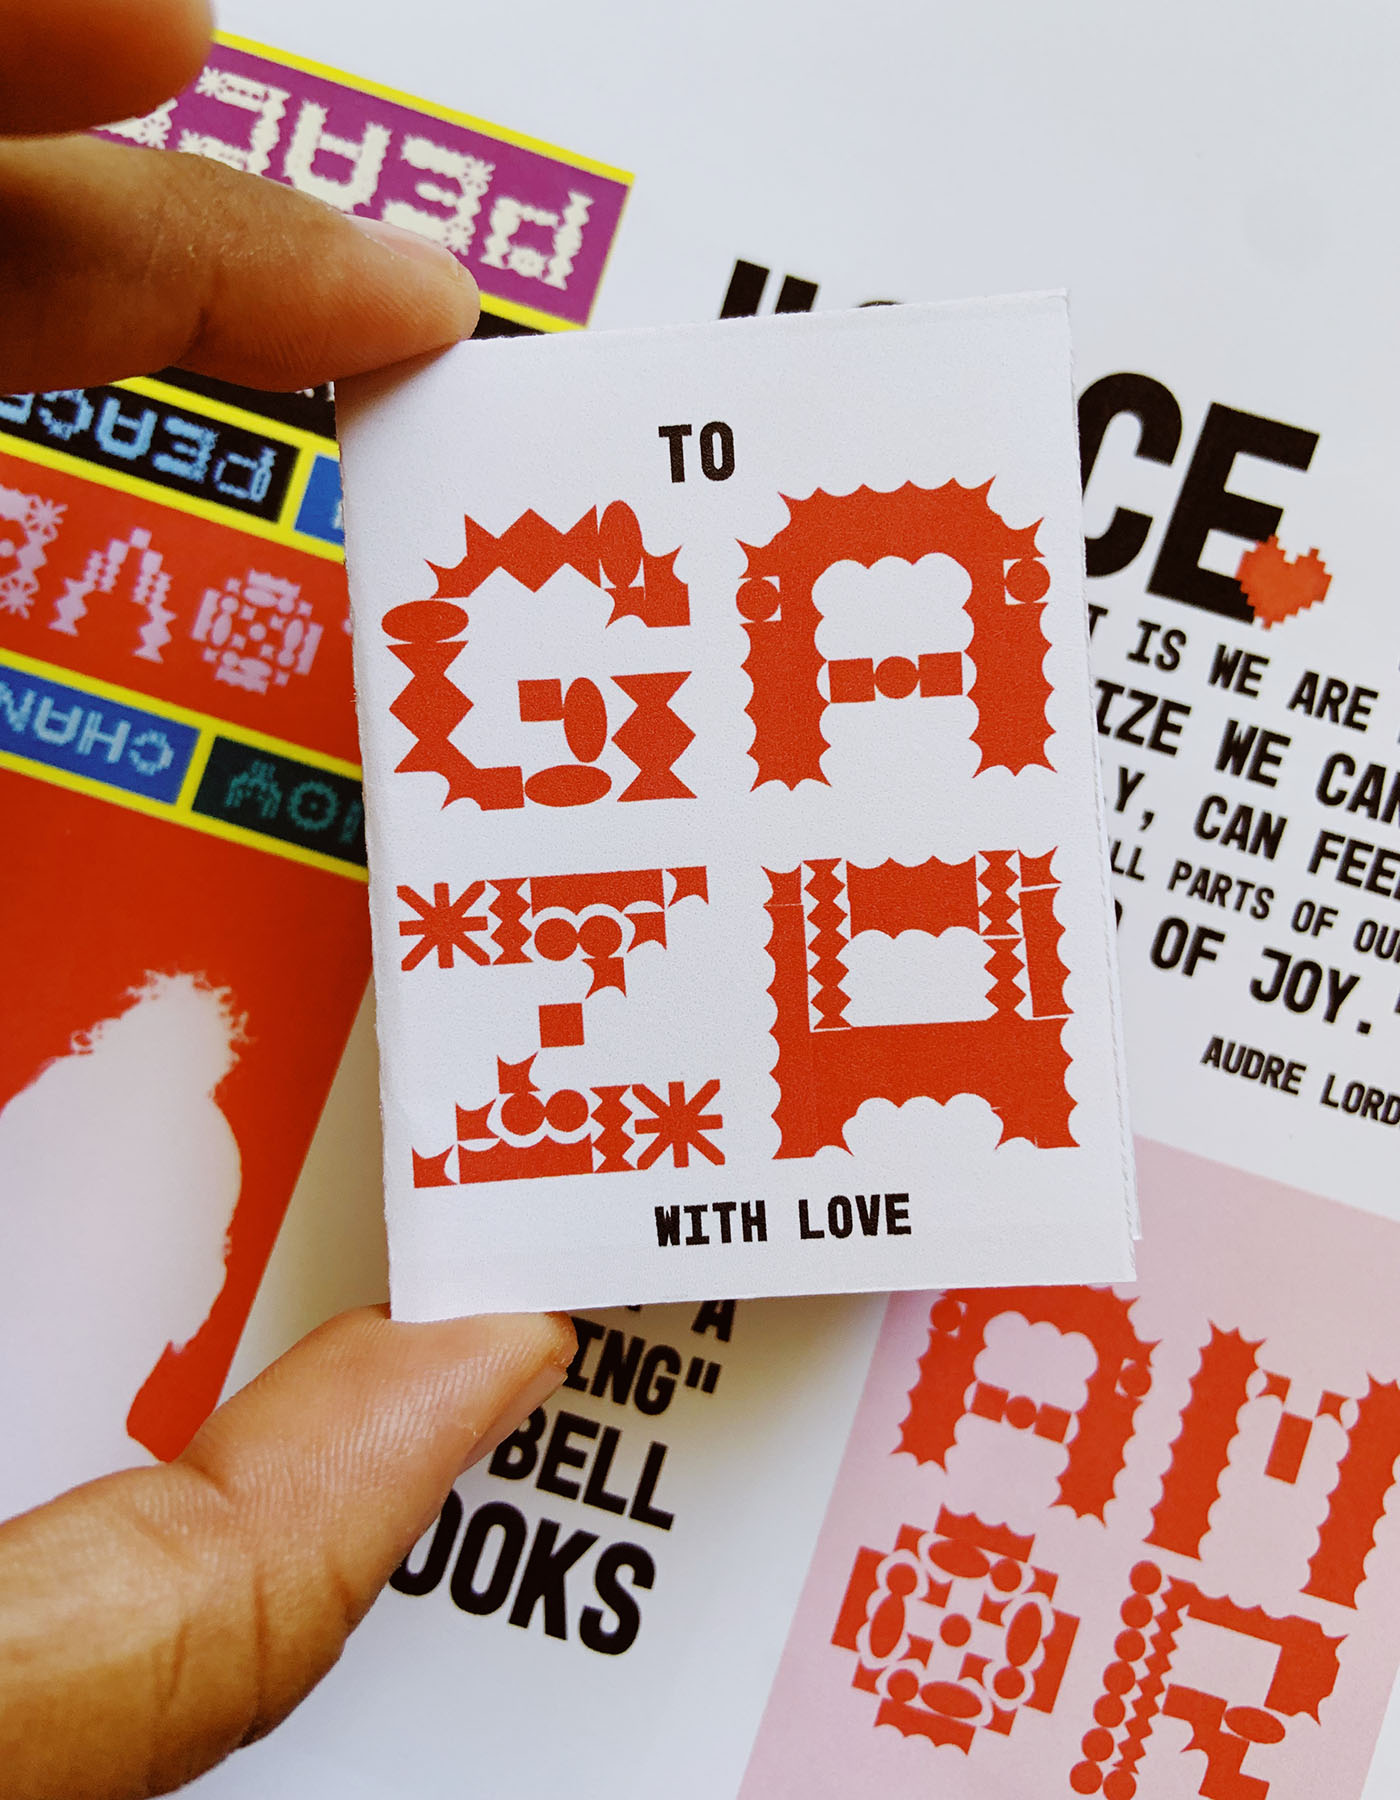 A photo of Jen White Jonhson's latest zine dedicated to Gaza titled "To Gaza, With Love"